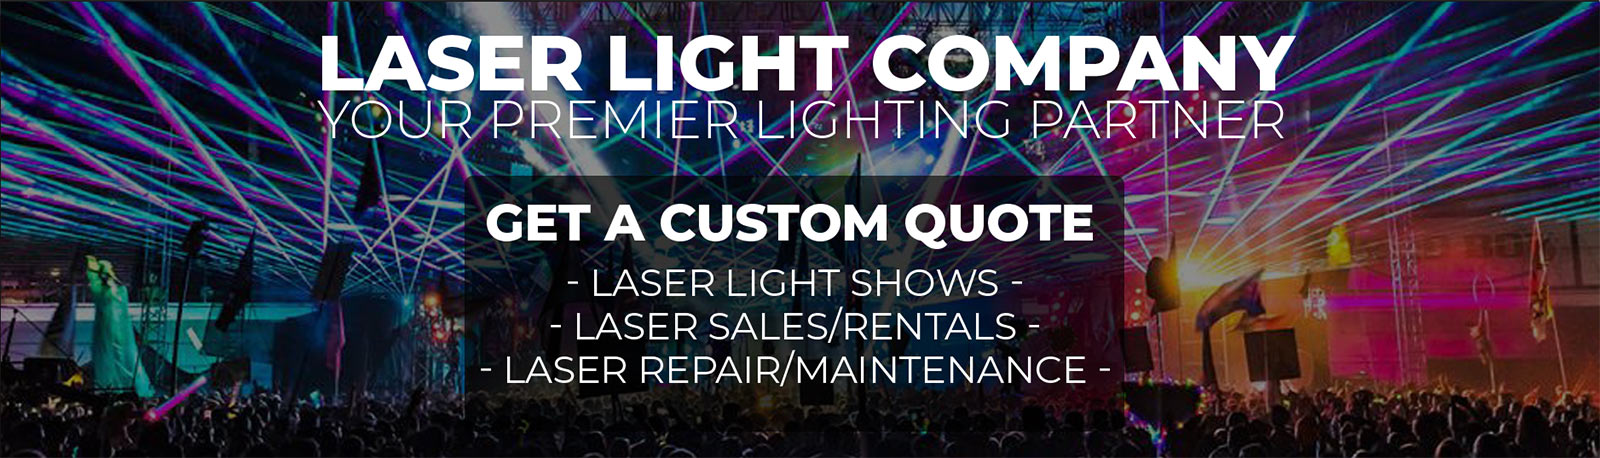 Laser Light Company - Your Premier Lighting Partner